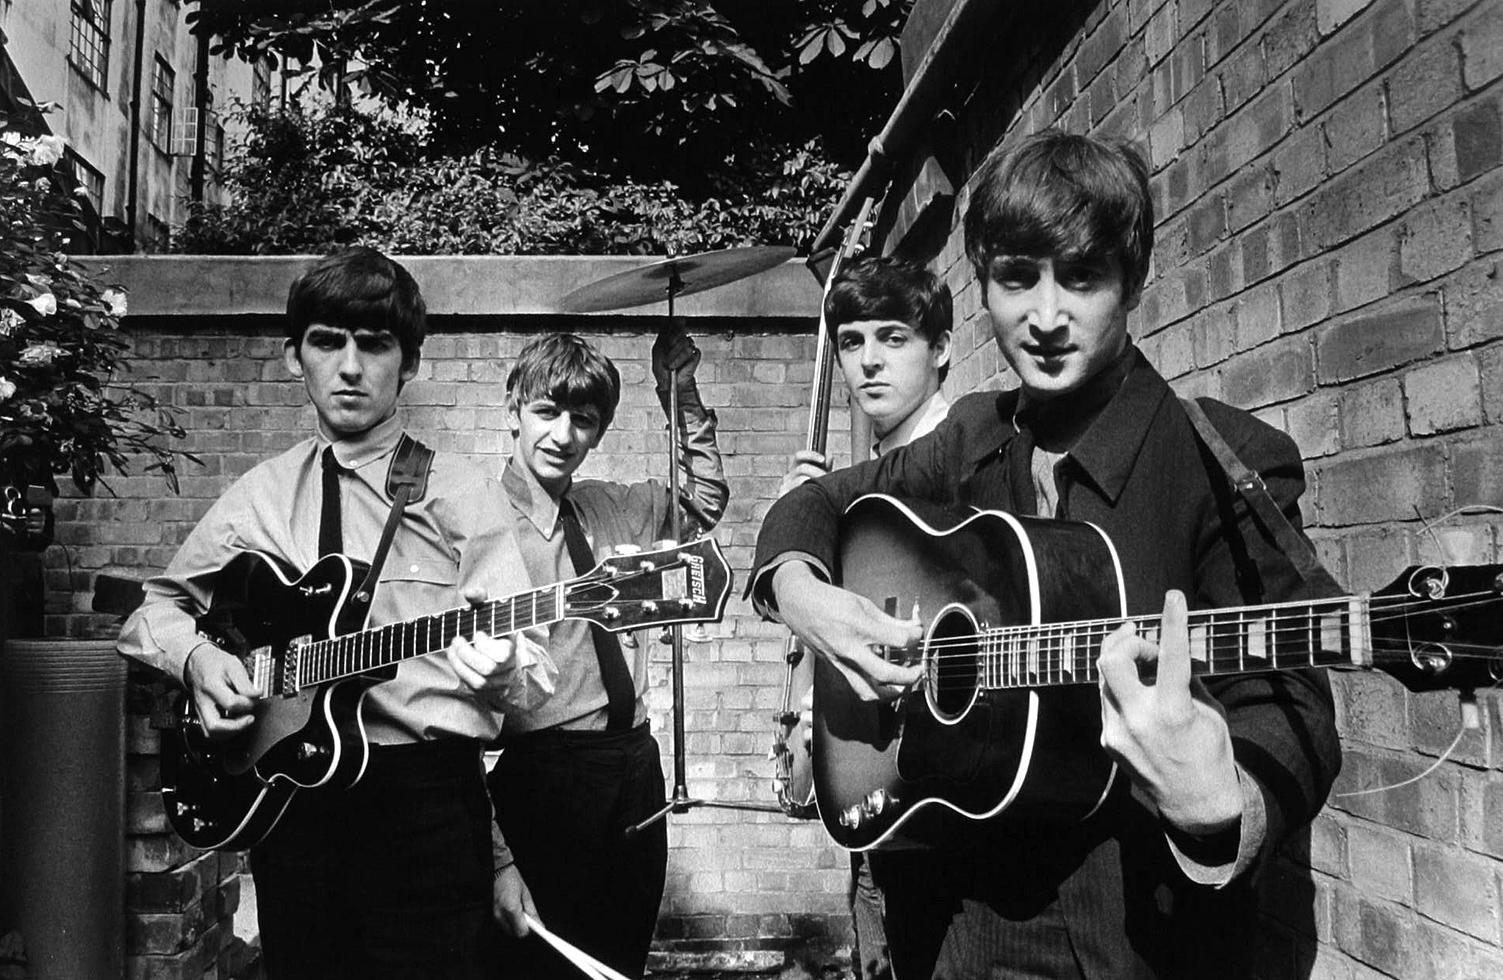 Terry O'Neill Portrait Photograph - The Beatles Backyard (12" x 16")